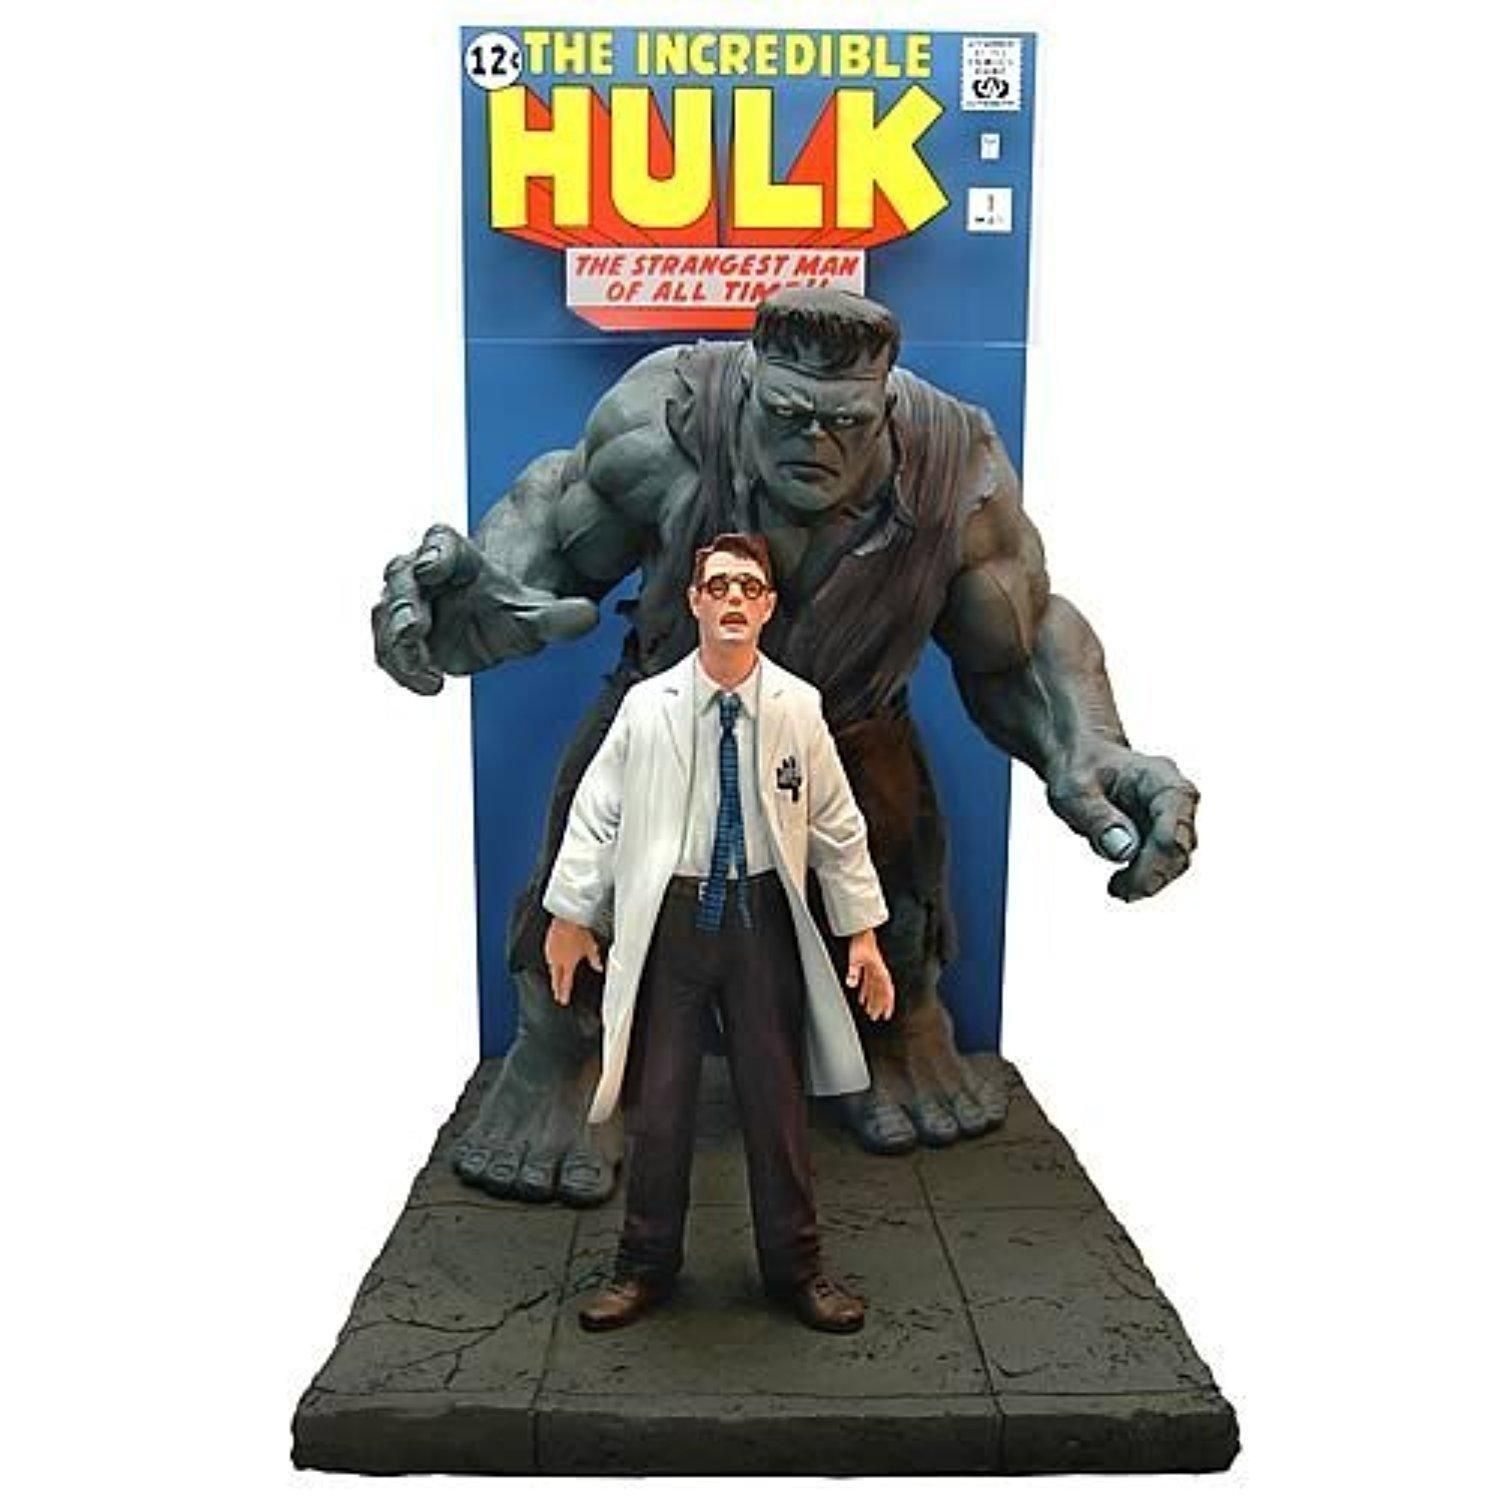 incredible-hulk-1-comic-book-cover-scene-replica-by-master-replicas-by-master-replicas